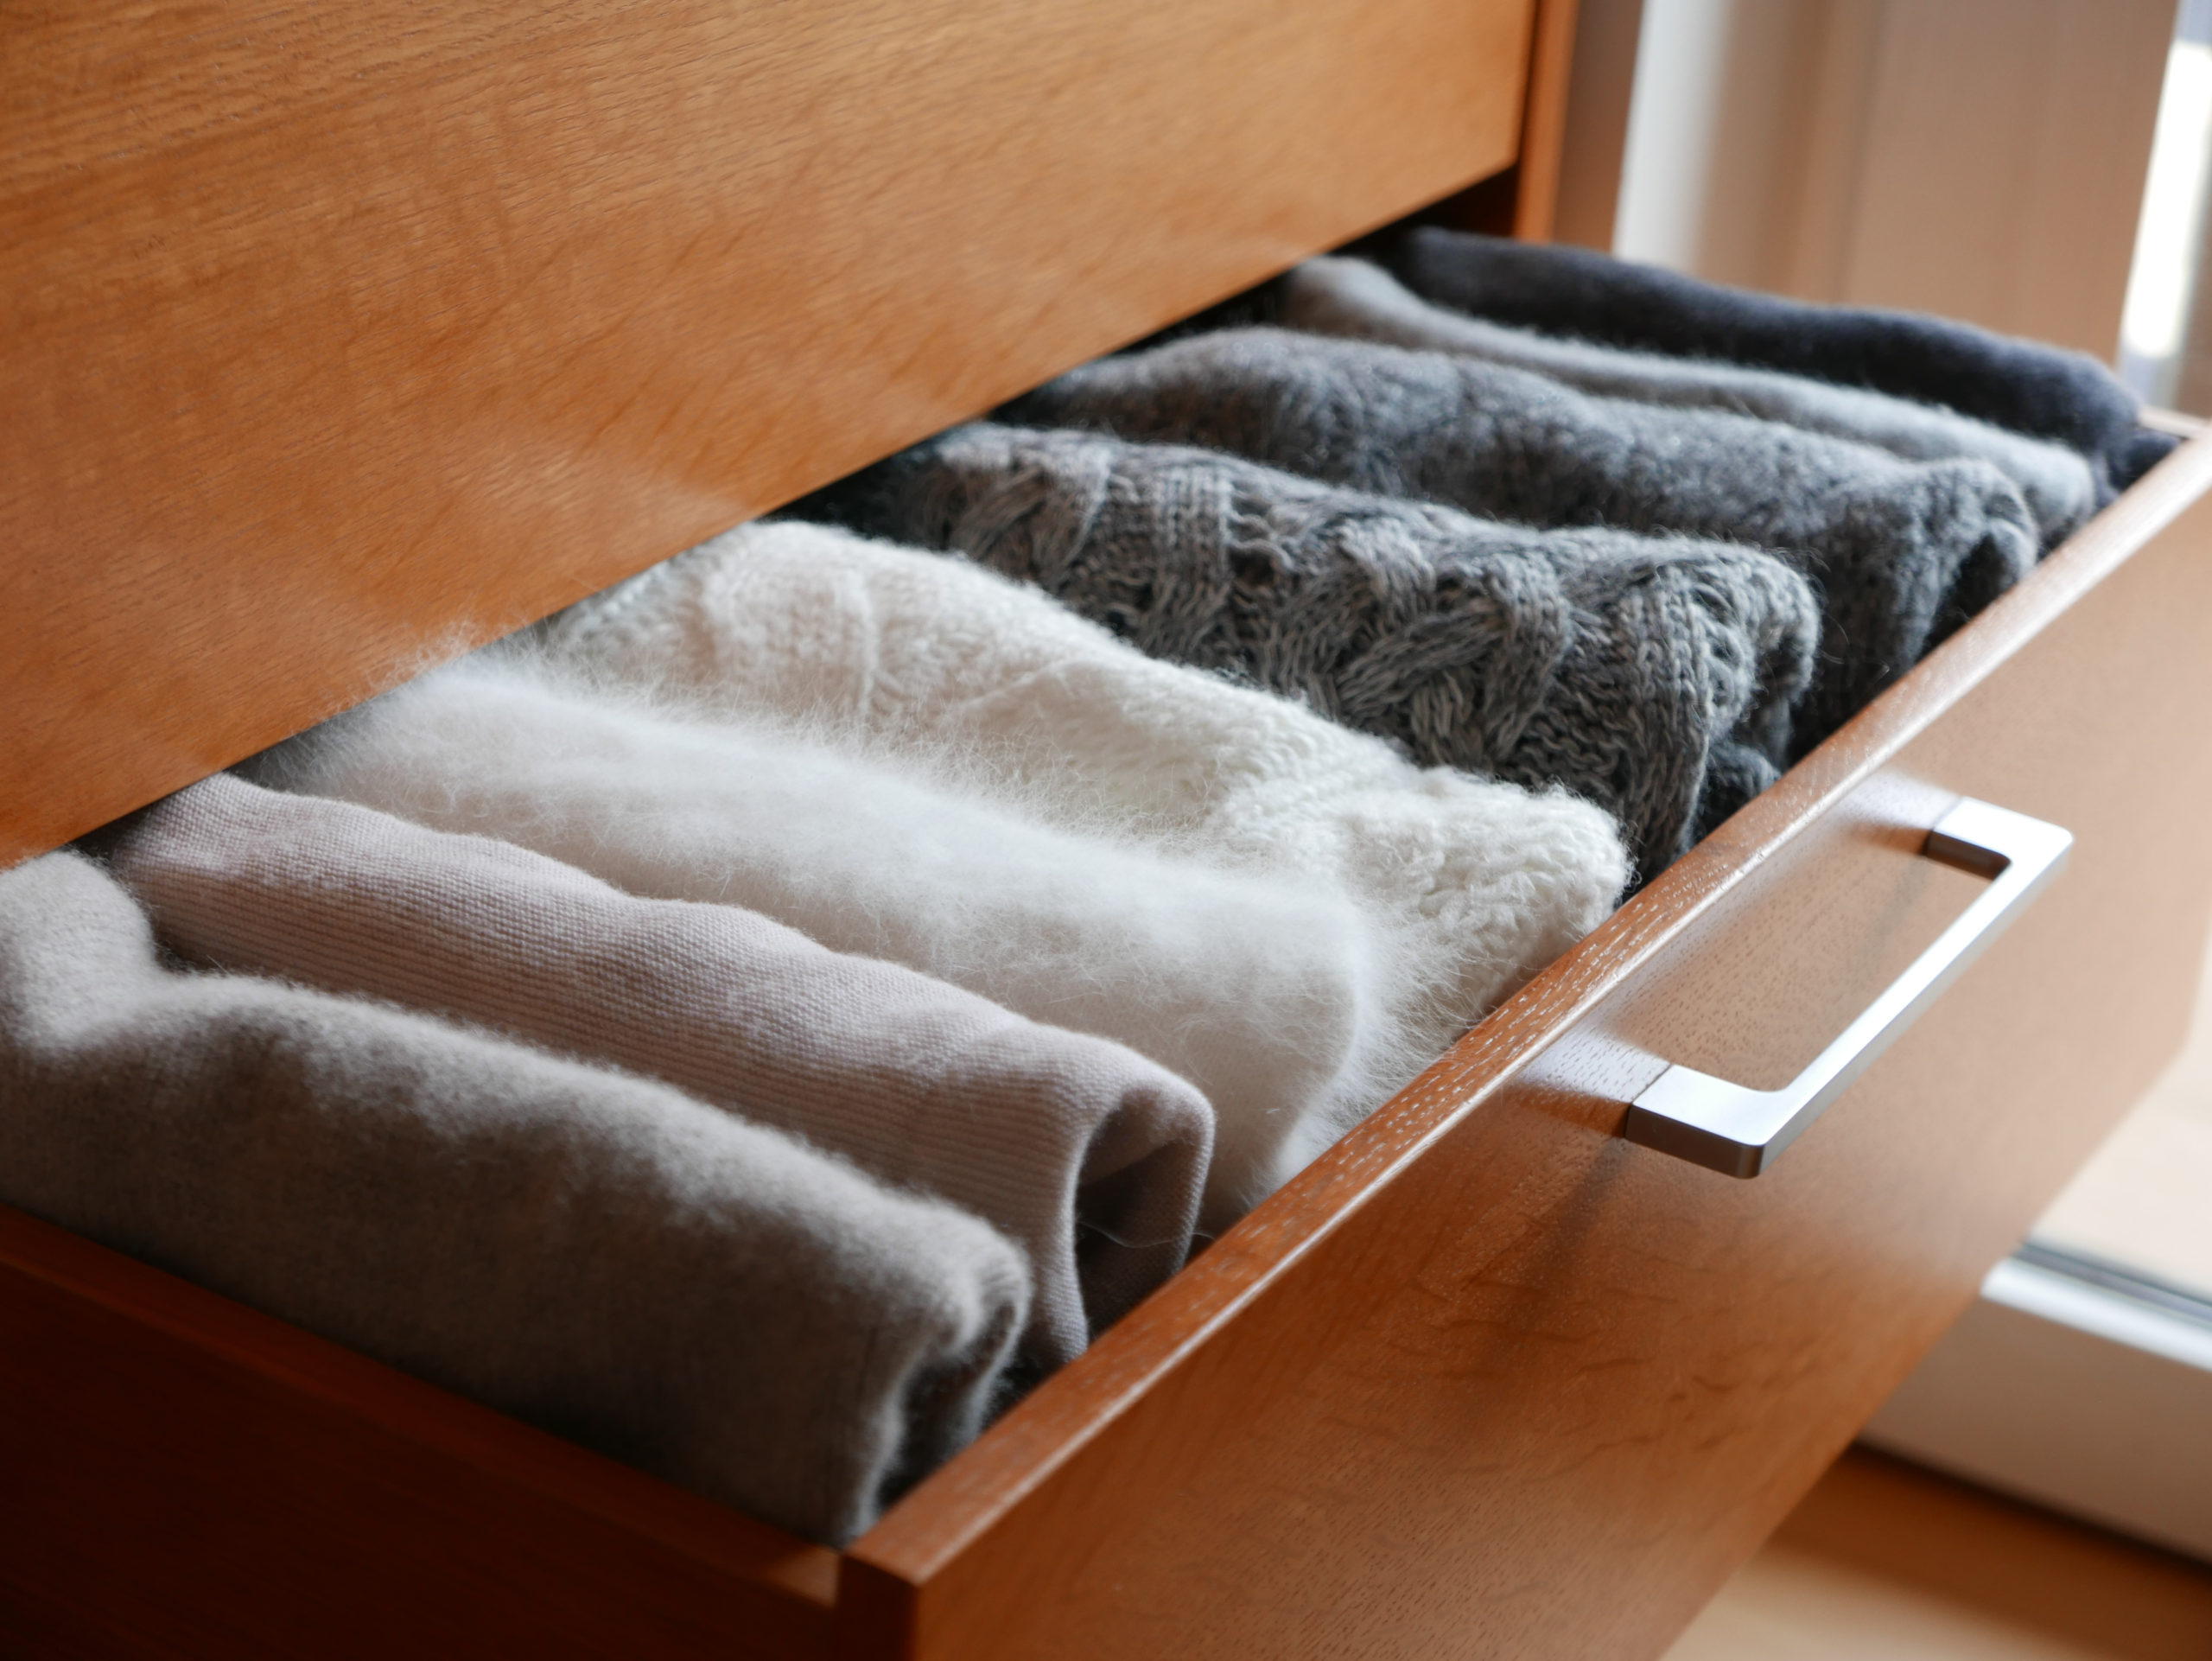 Organize drawers.